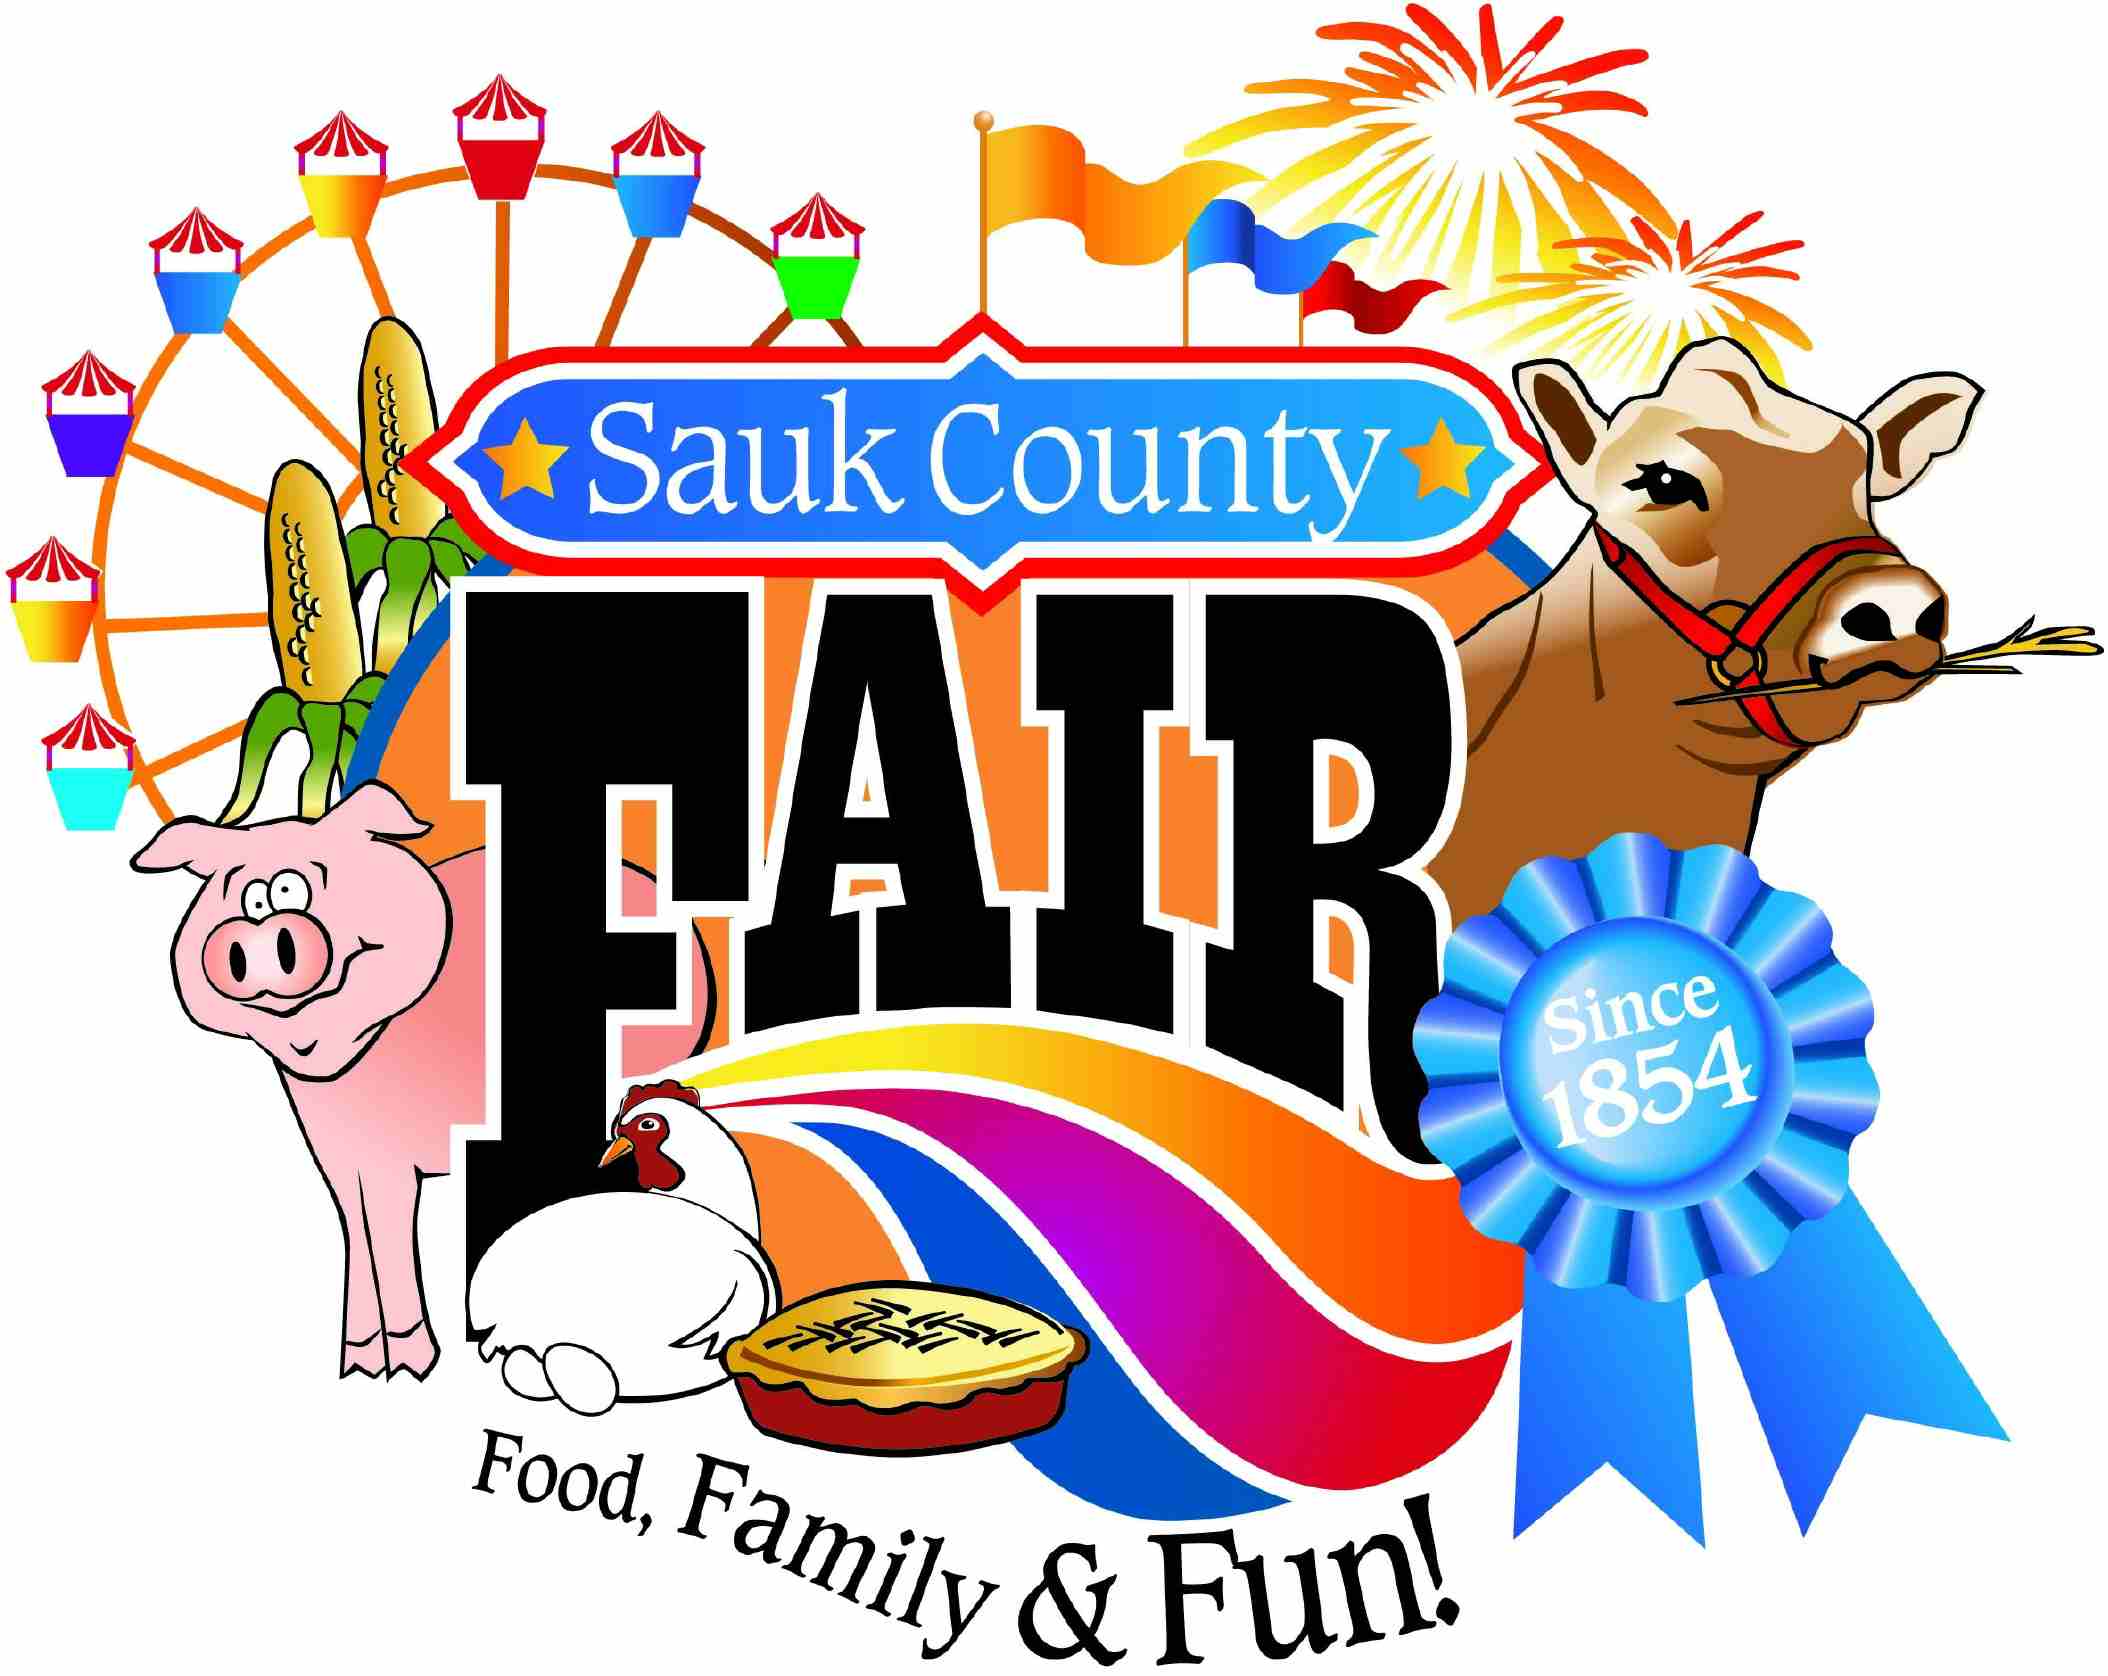 Sauk County Fair (SaukFair) Twitter